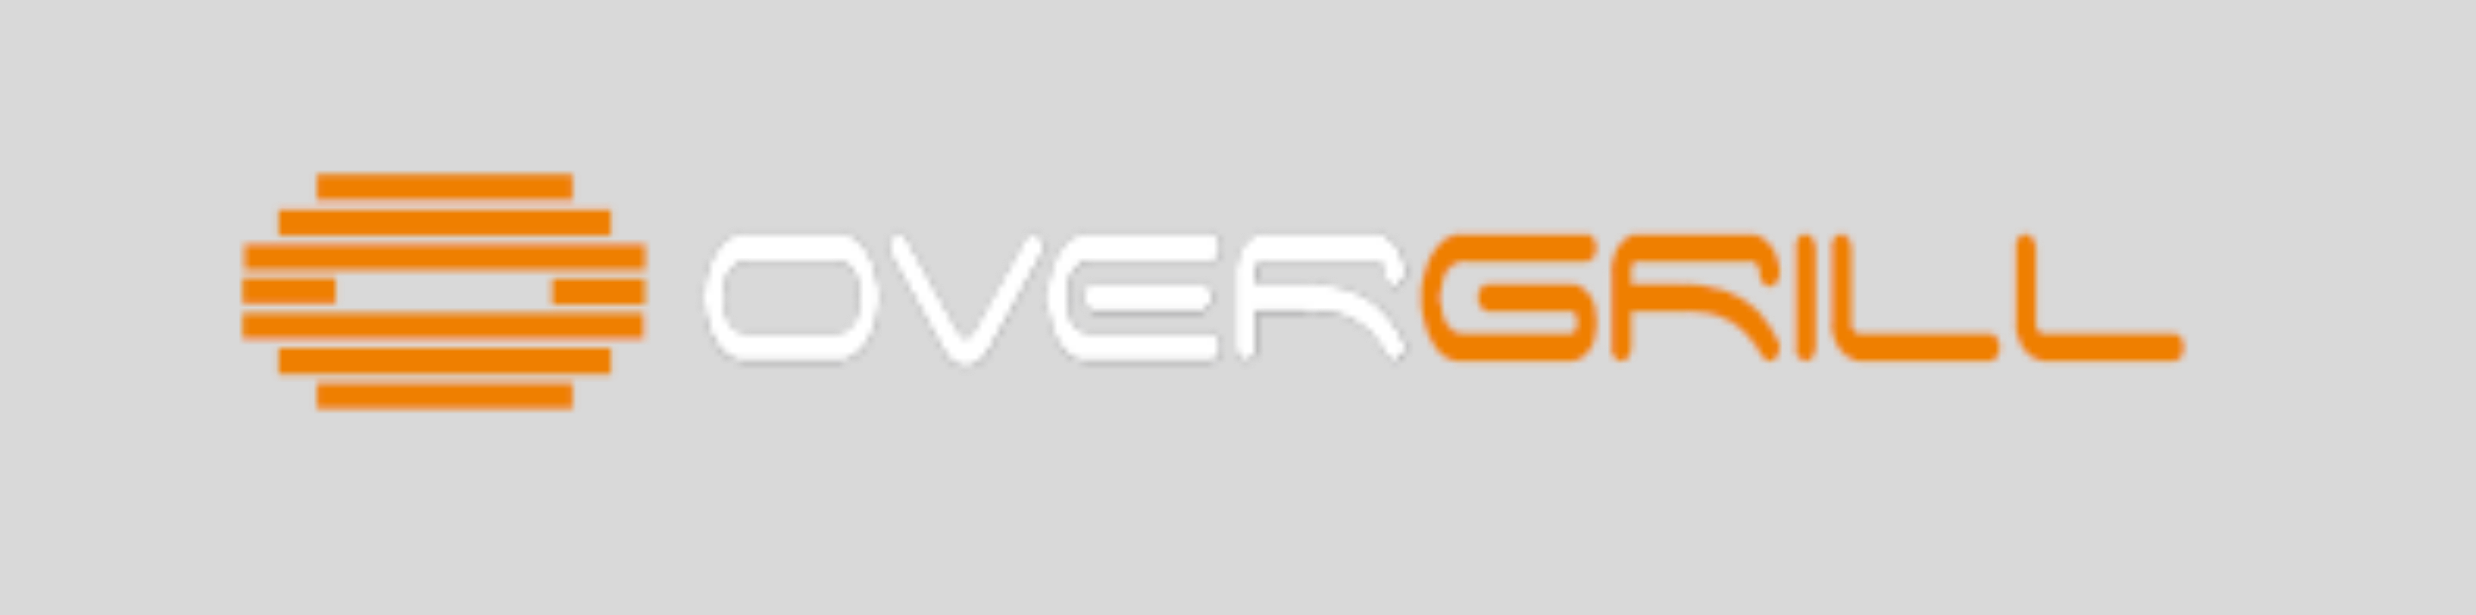 logo_overgrill_b